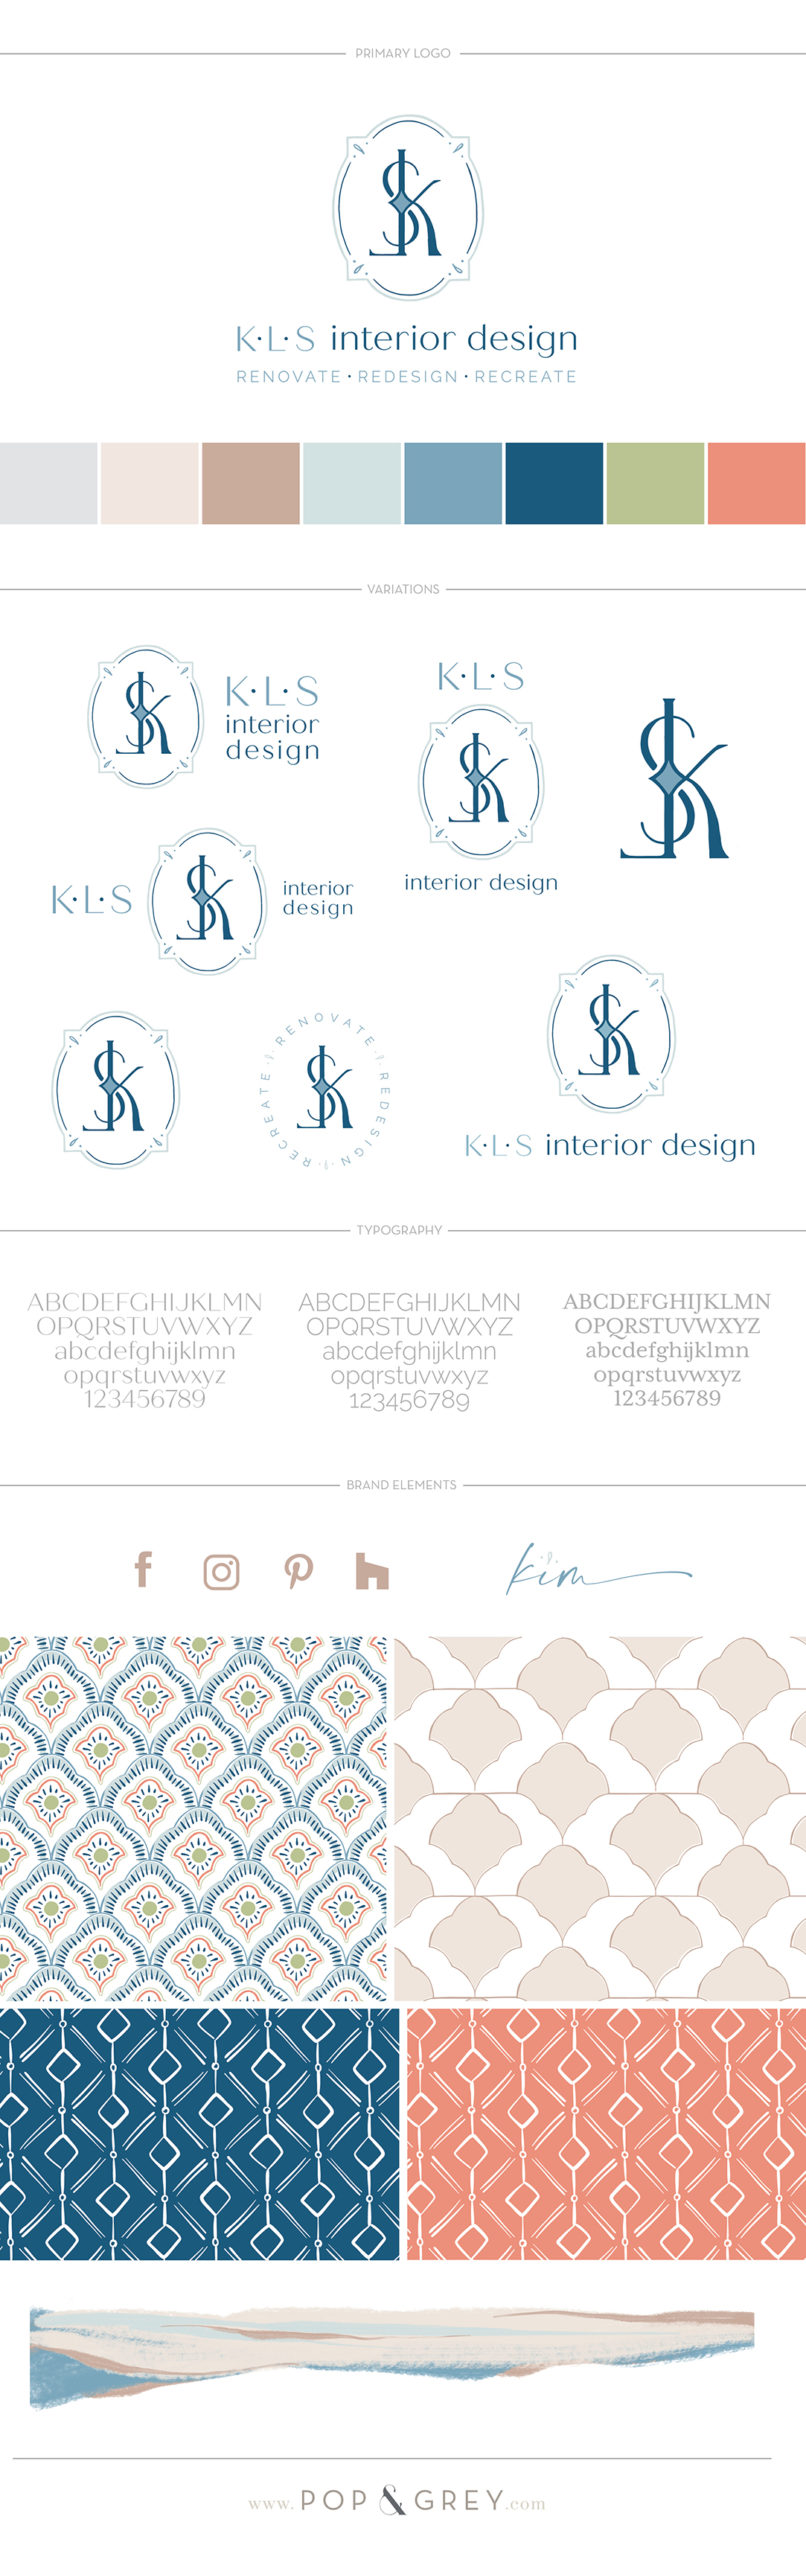 KLS interior design brand design by pop & grey